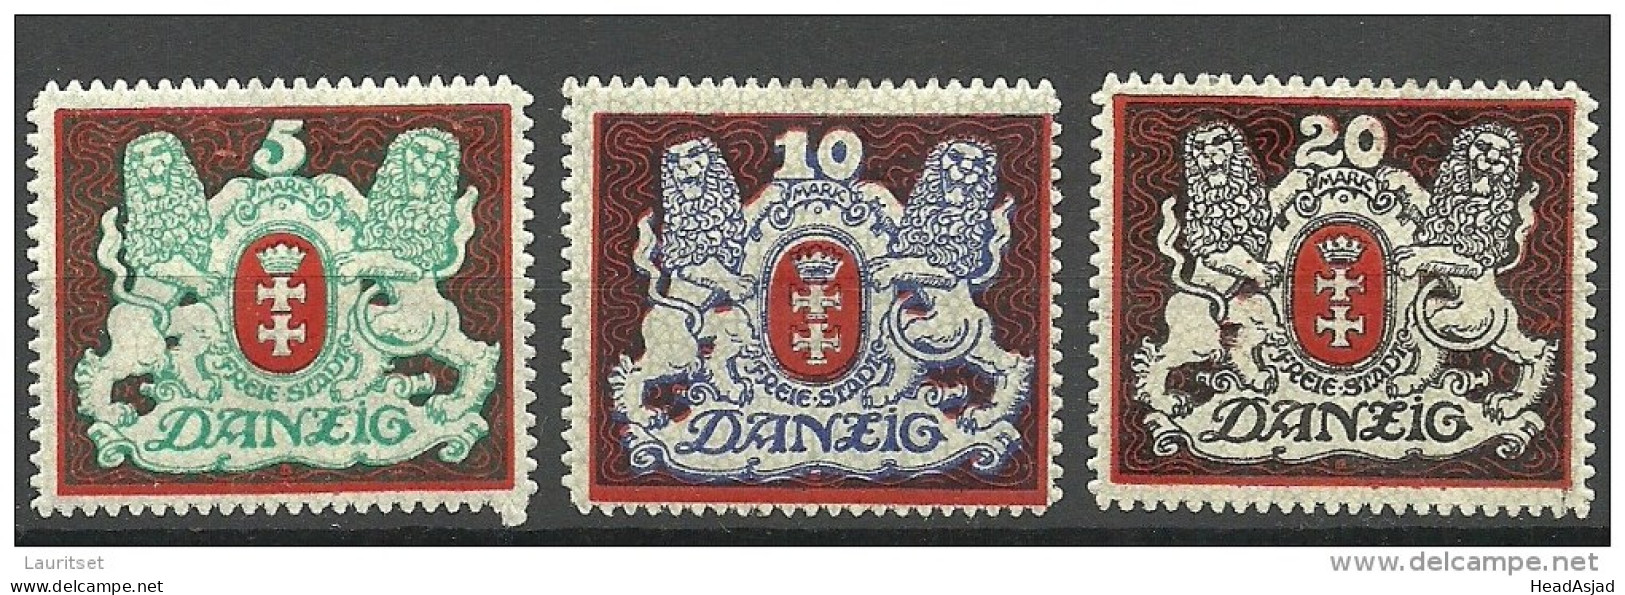 Deutschland DANZIG Gdansk 1921 Coat Of Arms Wappen Michel 87 - 89 * - Ungebraucht